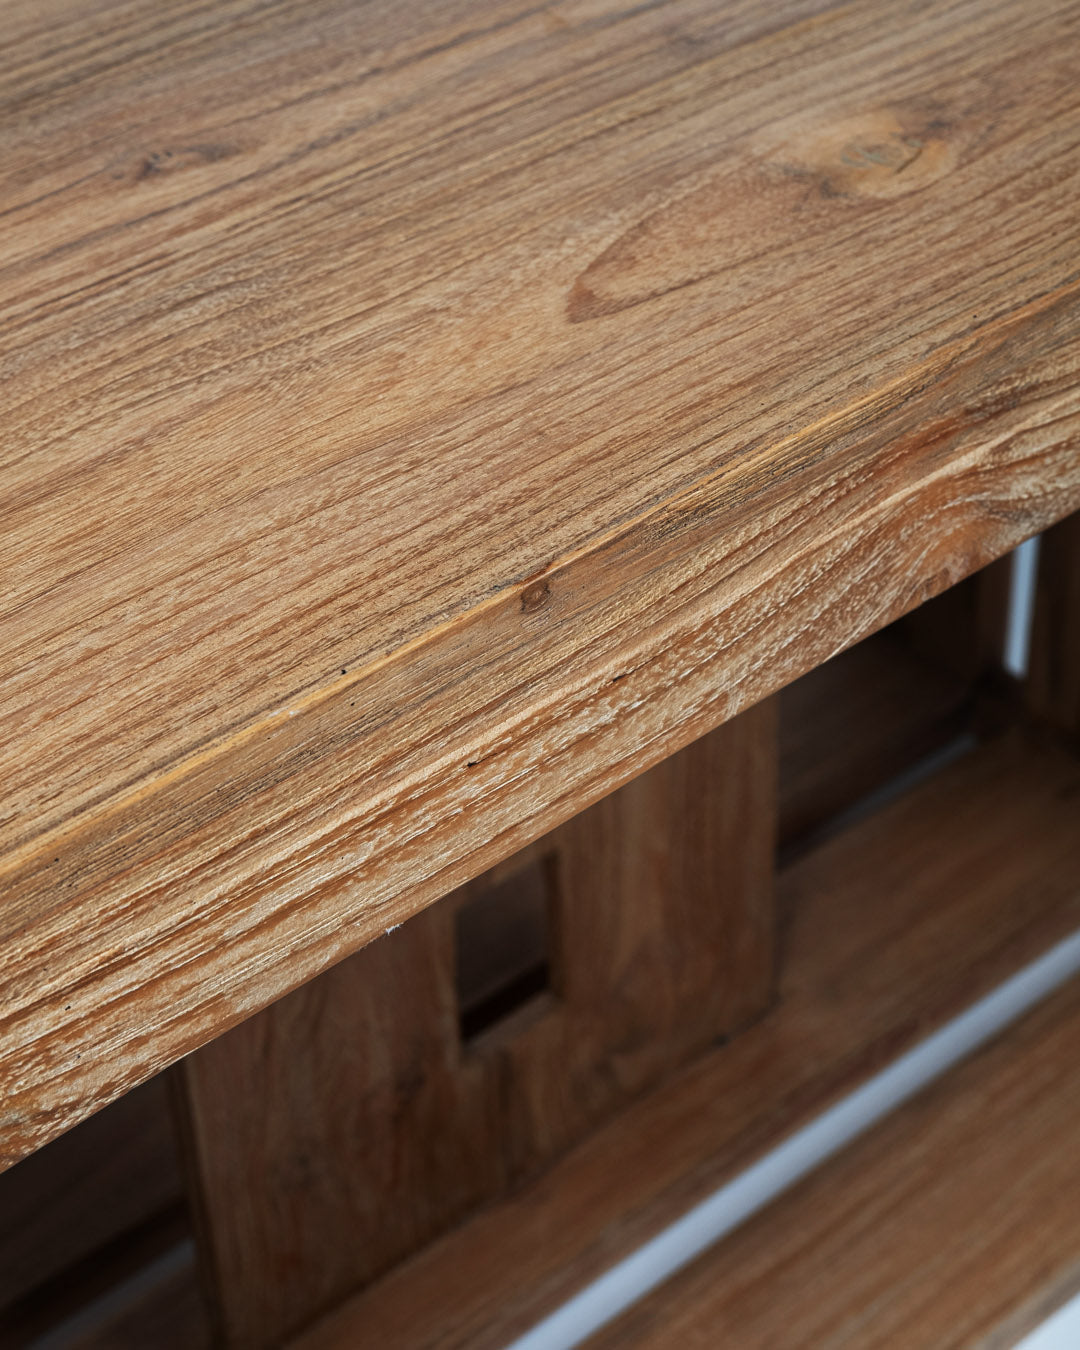 Mesa de comedor de madera maciza natural de teca Labua rectangular, hecha a mano con acabado natural, 80 cm Alto 150 cm Largo 79 cm Profundidad, origen Indonesia